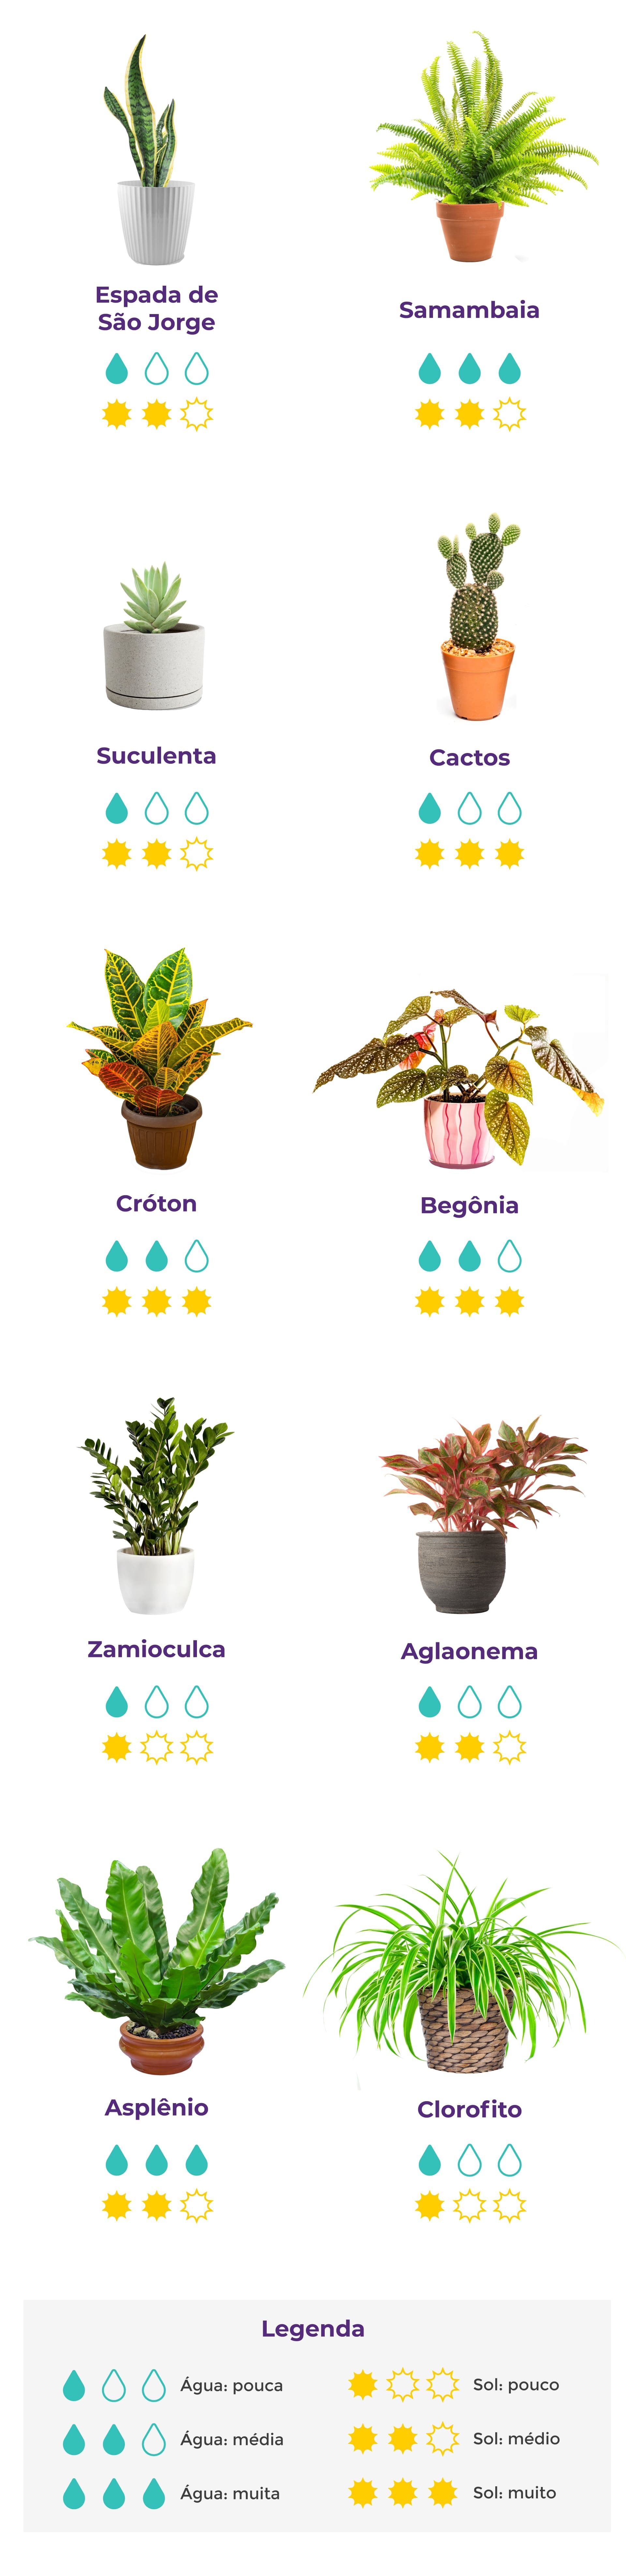 Plantas para casa: 10 espécies de plantas para cultivar dentro de casa